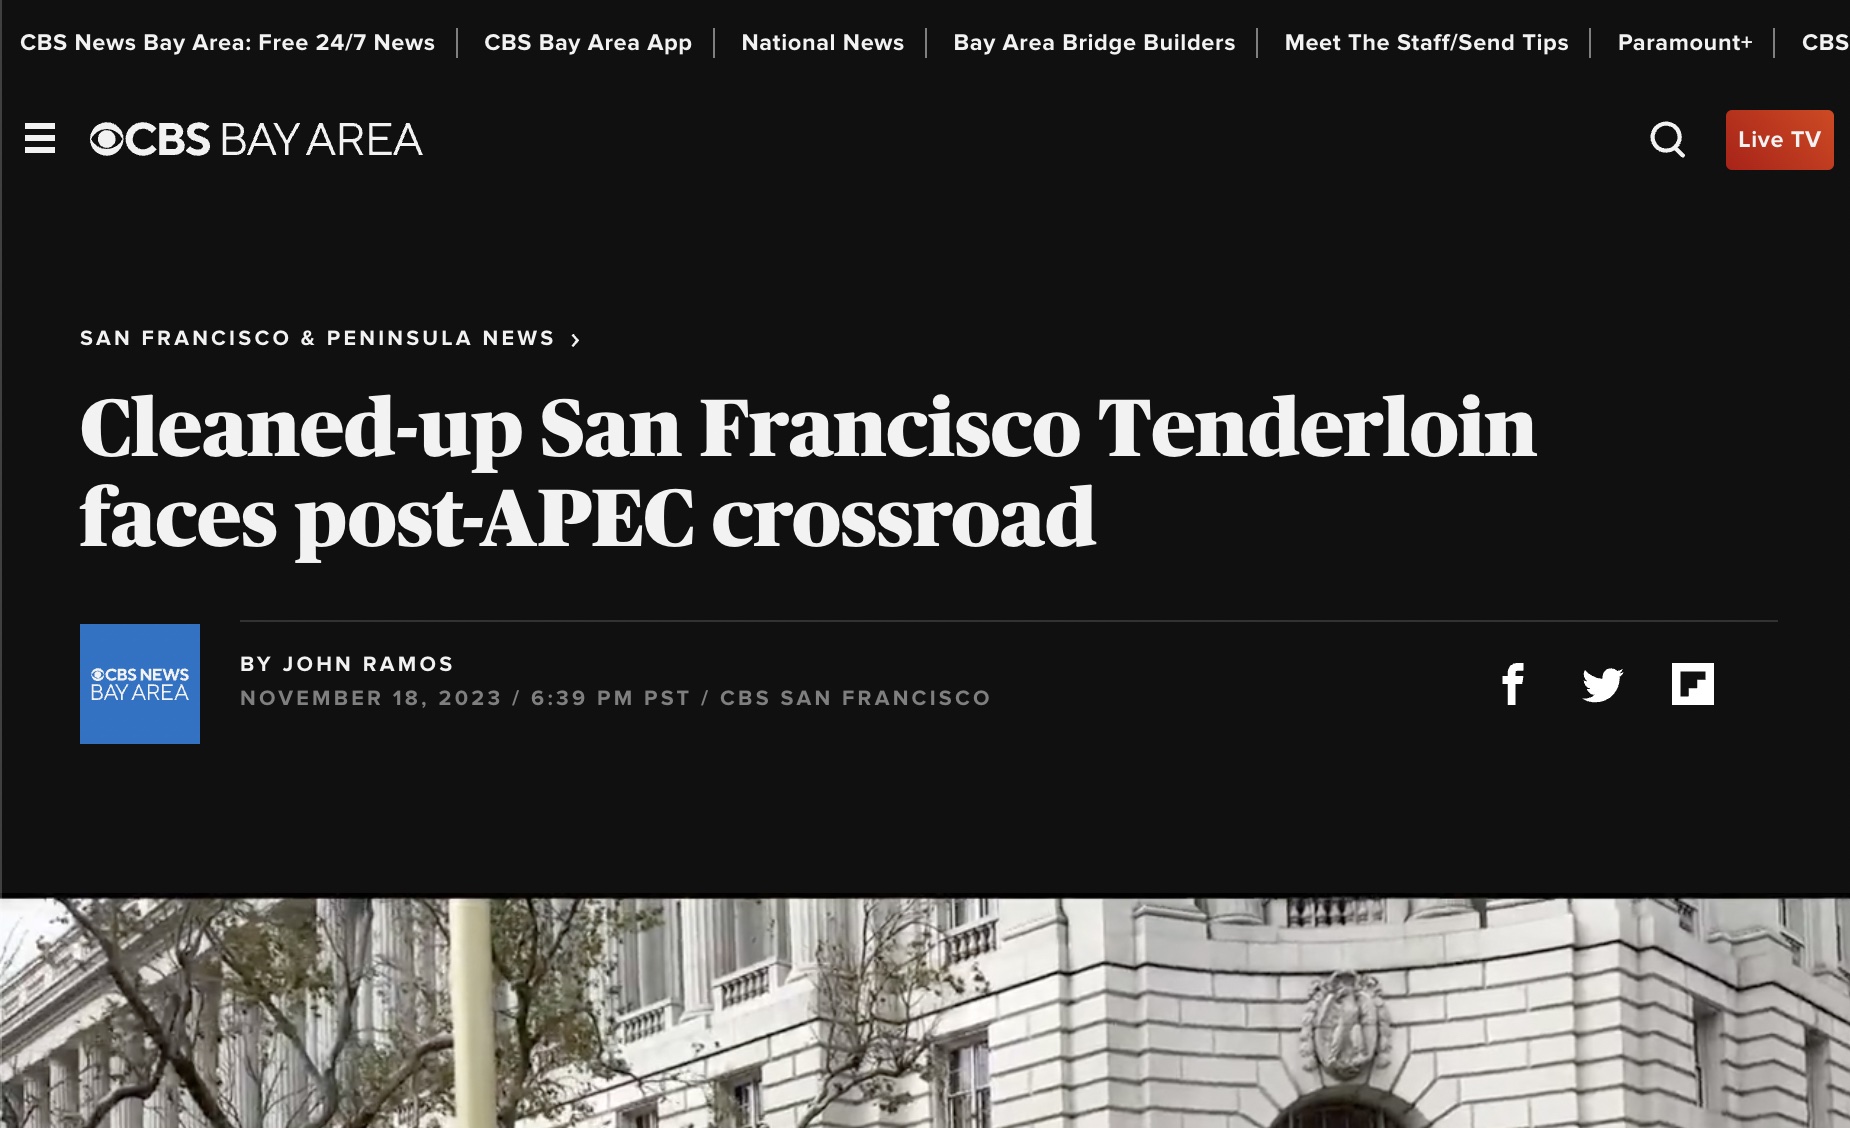 CBS News: Cleaned-up San Francisco Tenderloin faces post-APEC crossroad